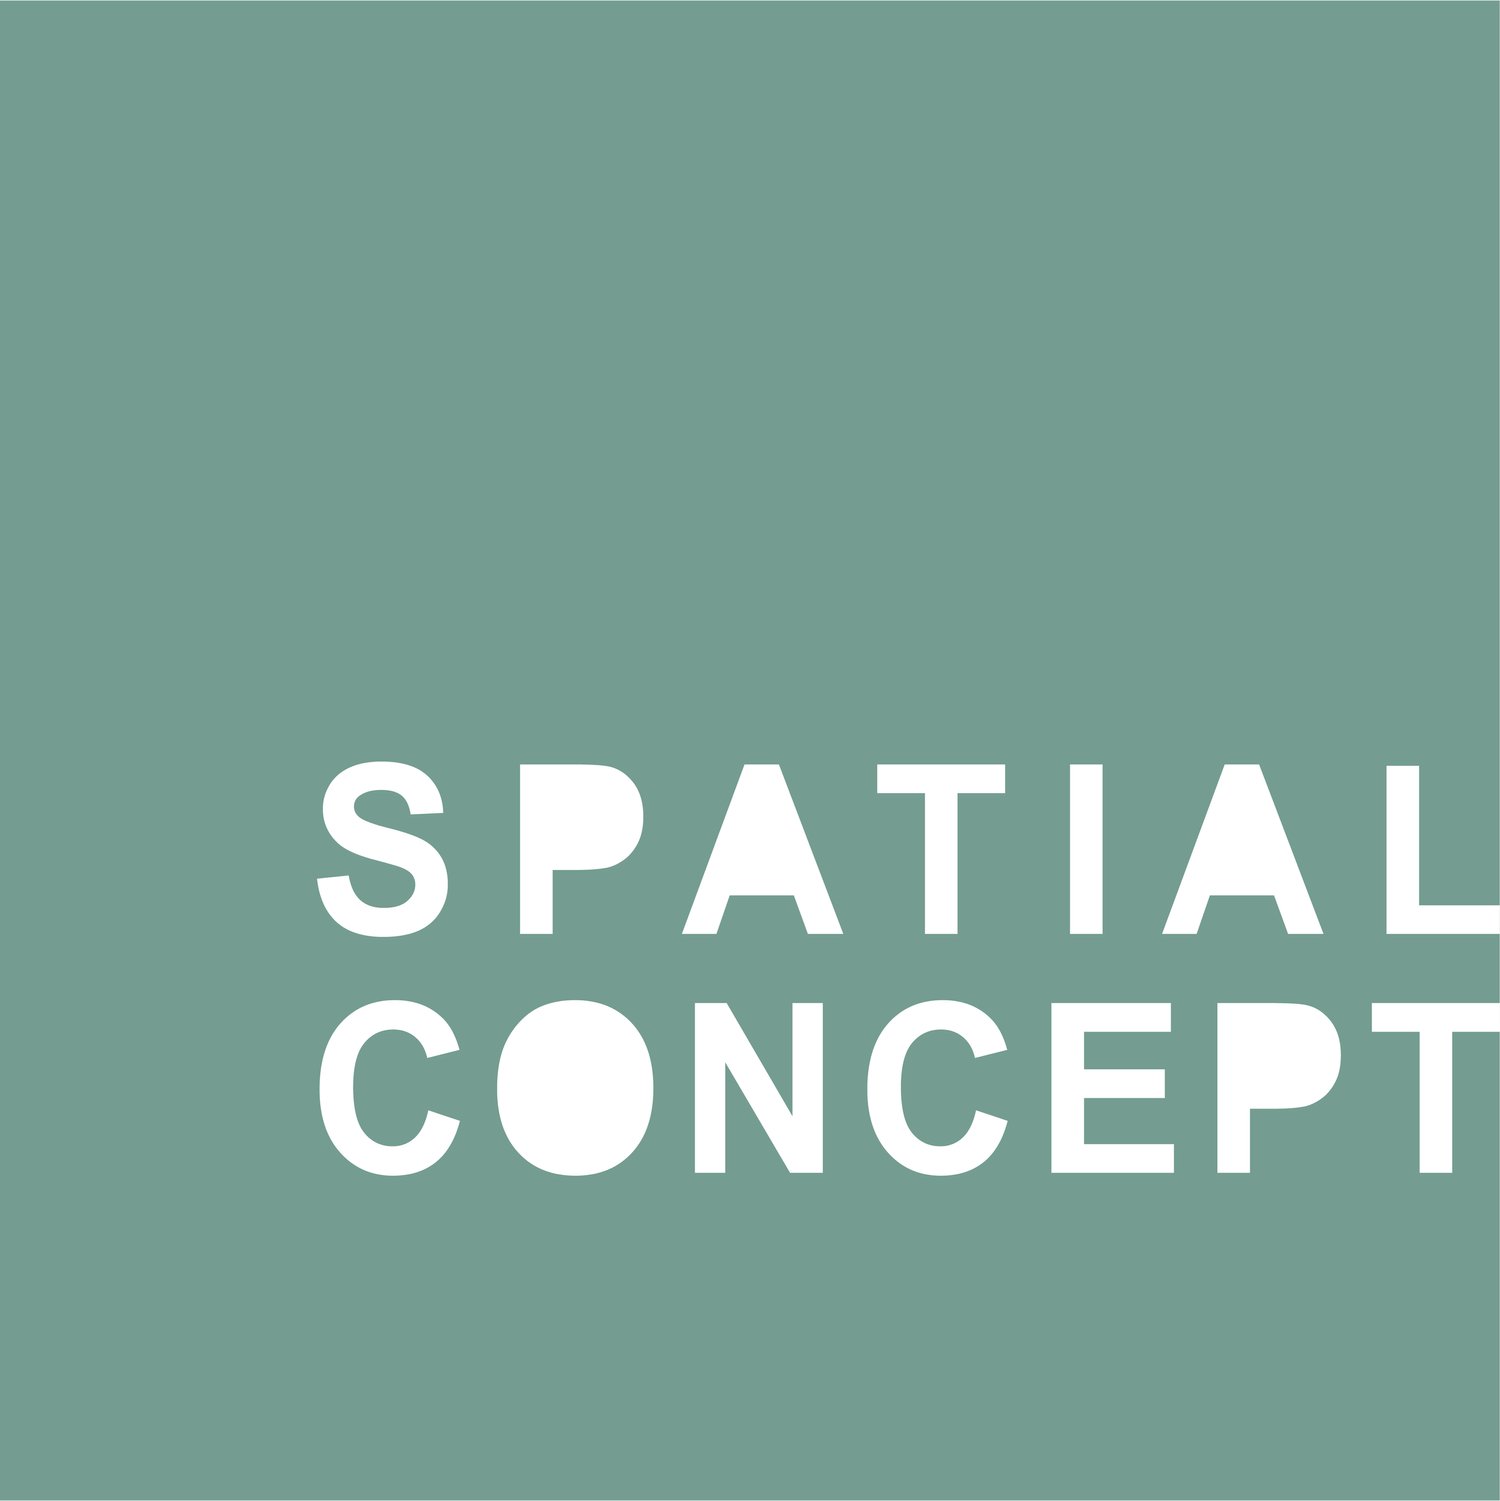 Spatial Concept